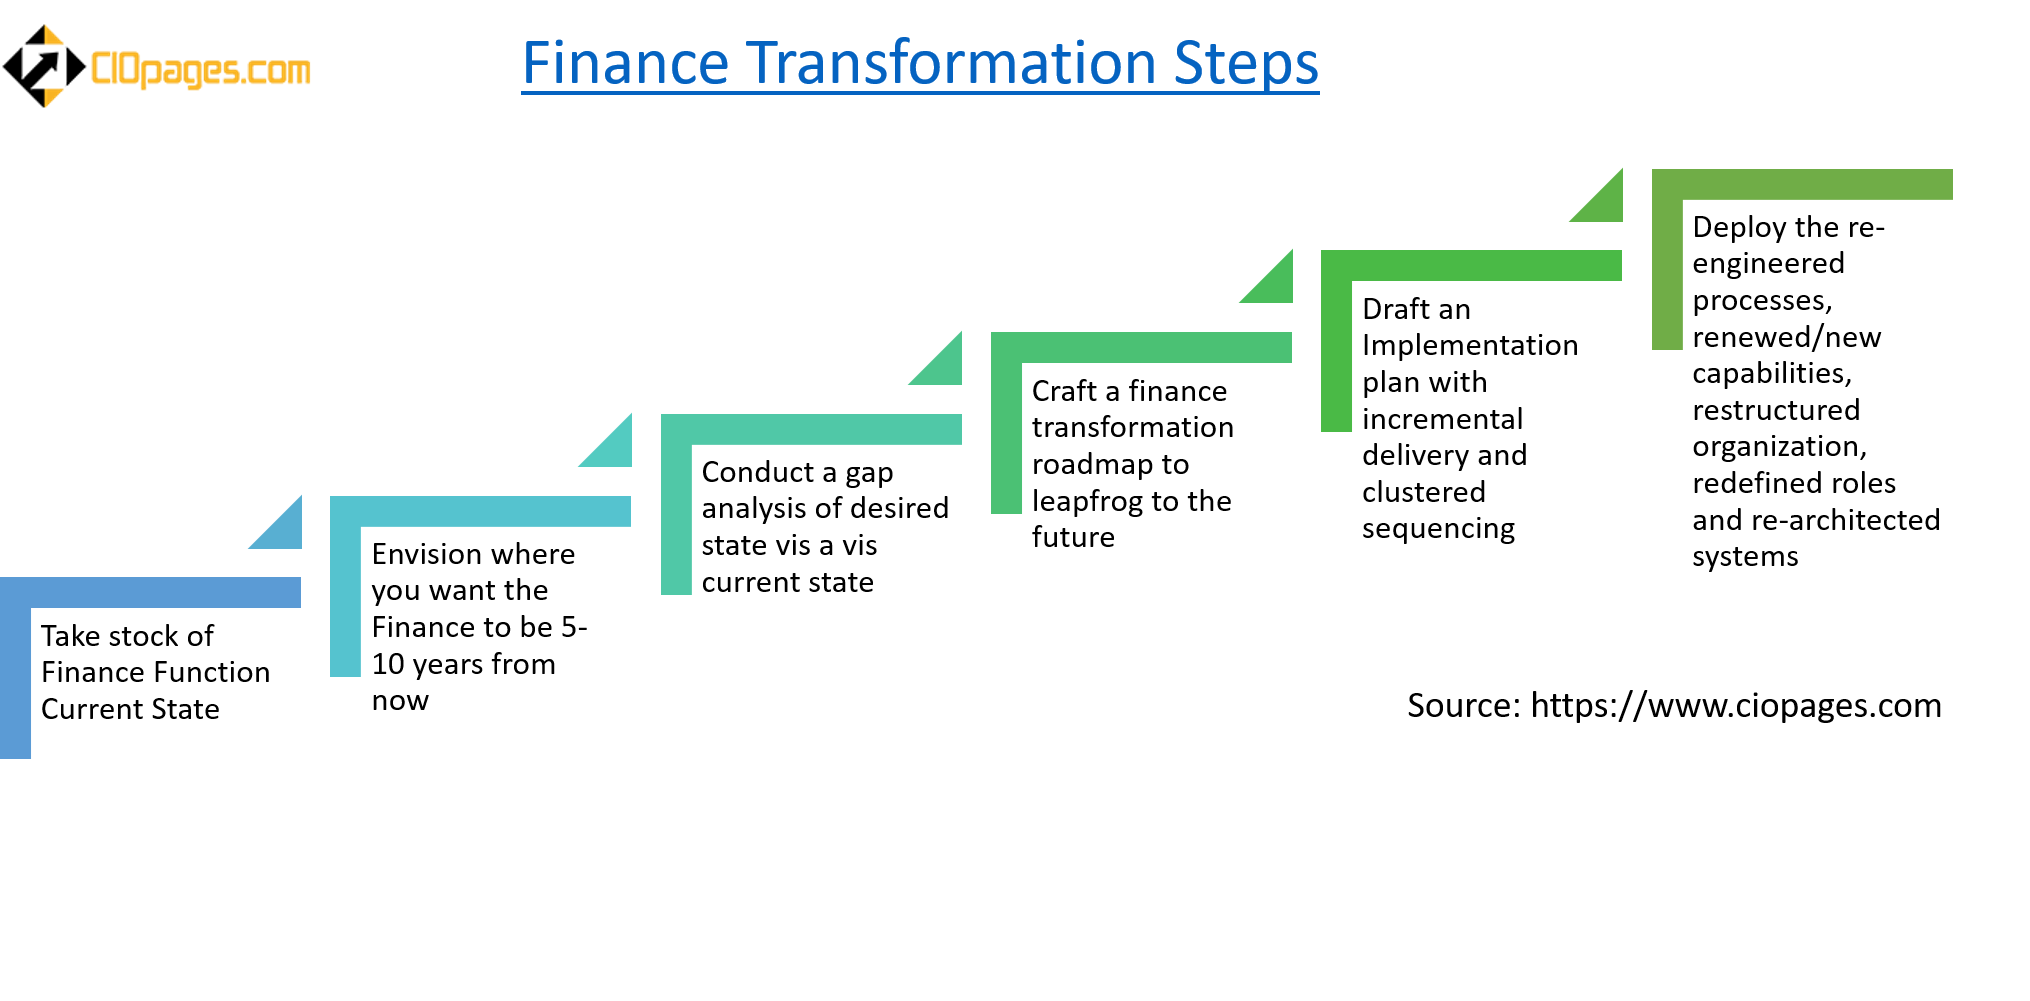 Finance Transformation Steps